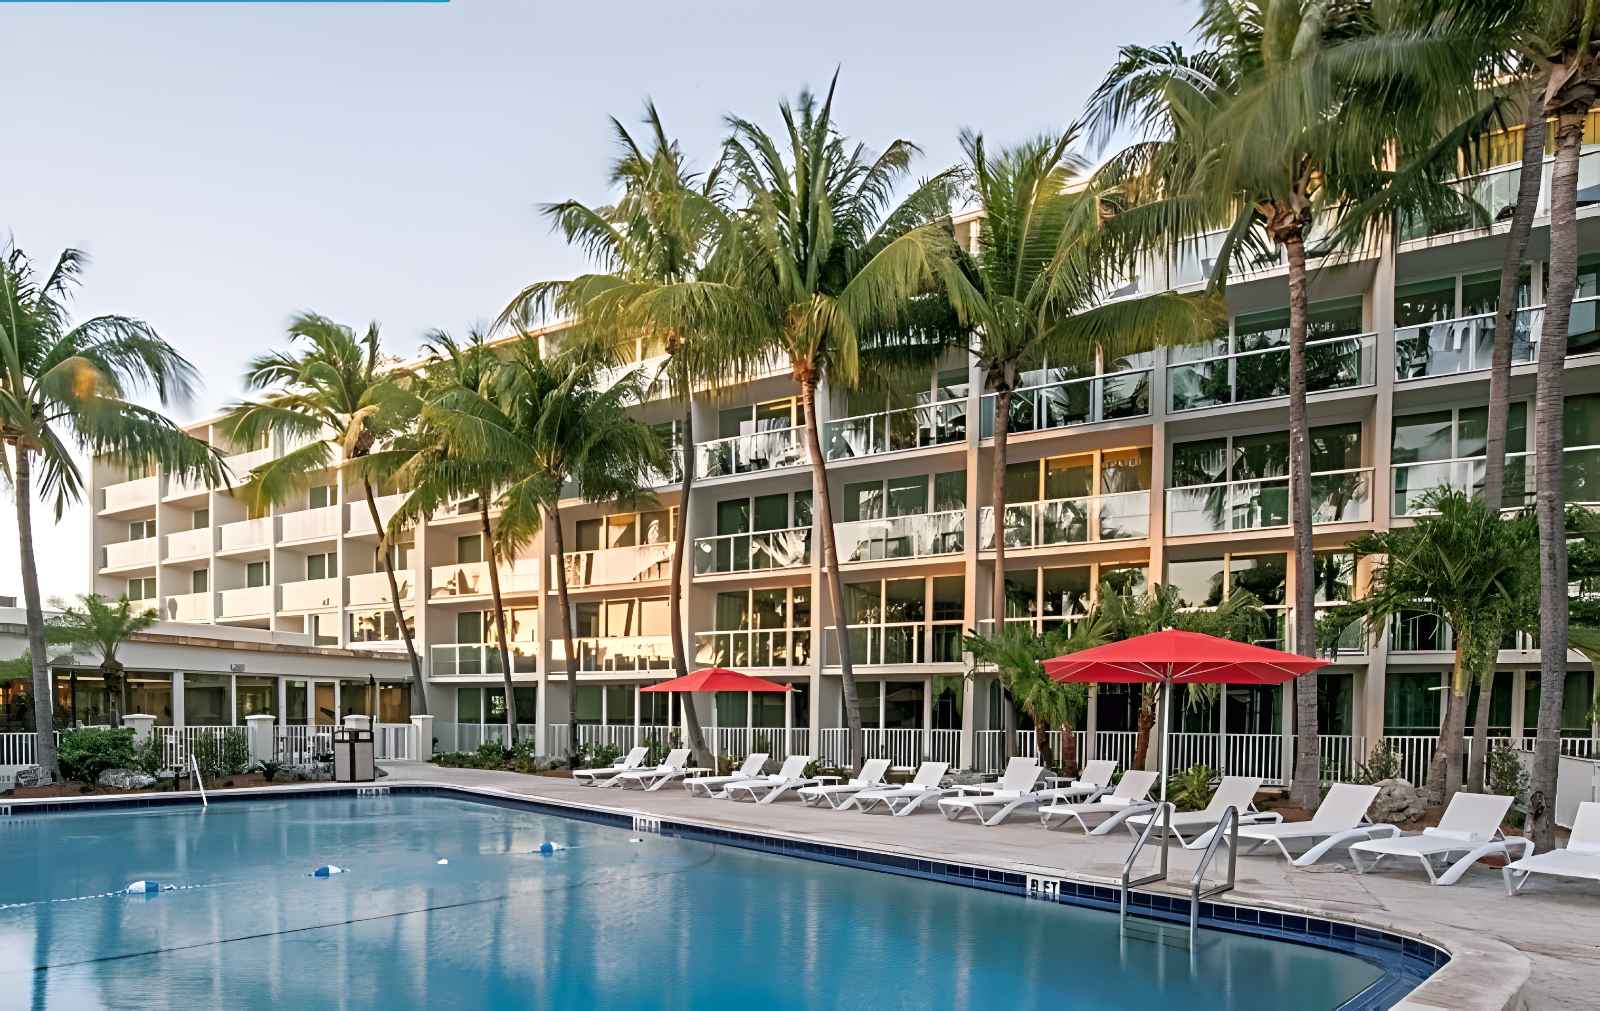 Best Beach Resorts in Florida Amara Cay Resort2